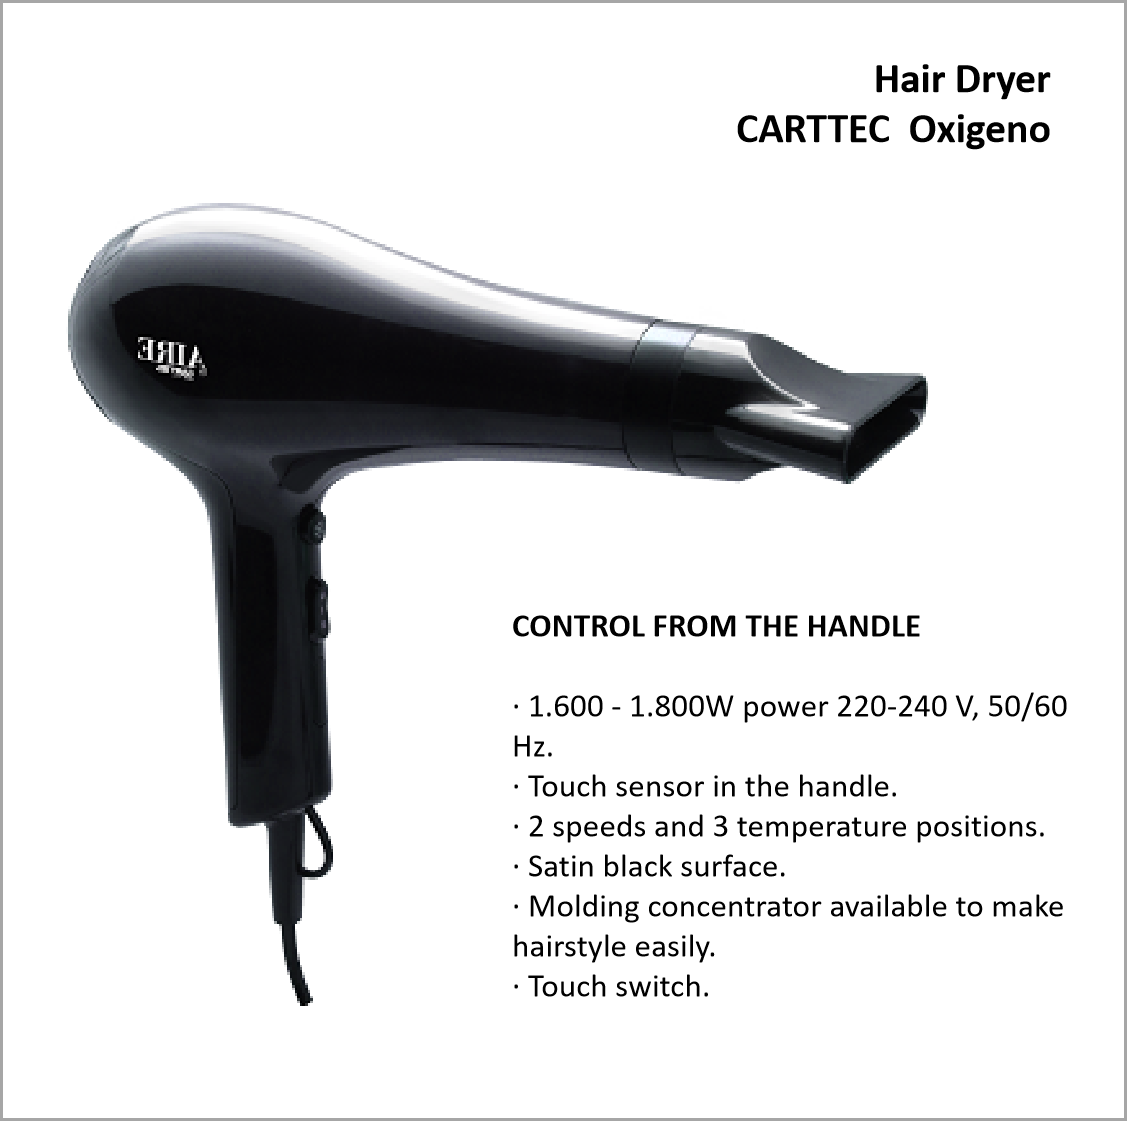 Debaf - CARTTEC  Oxigeno Hair Dryer